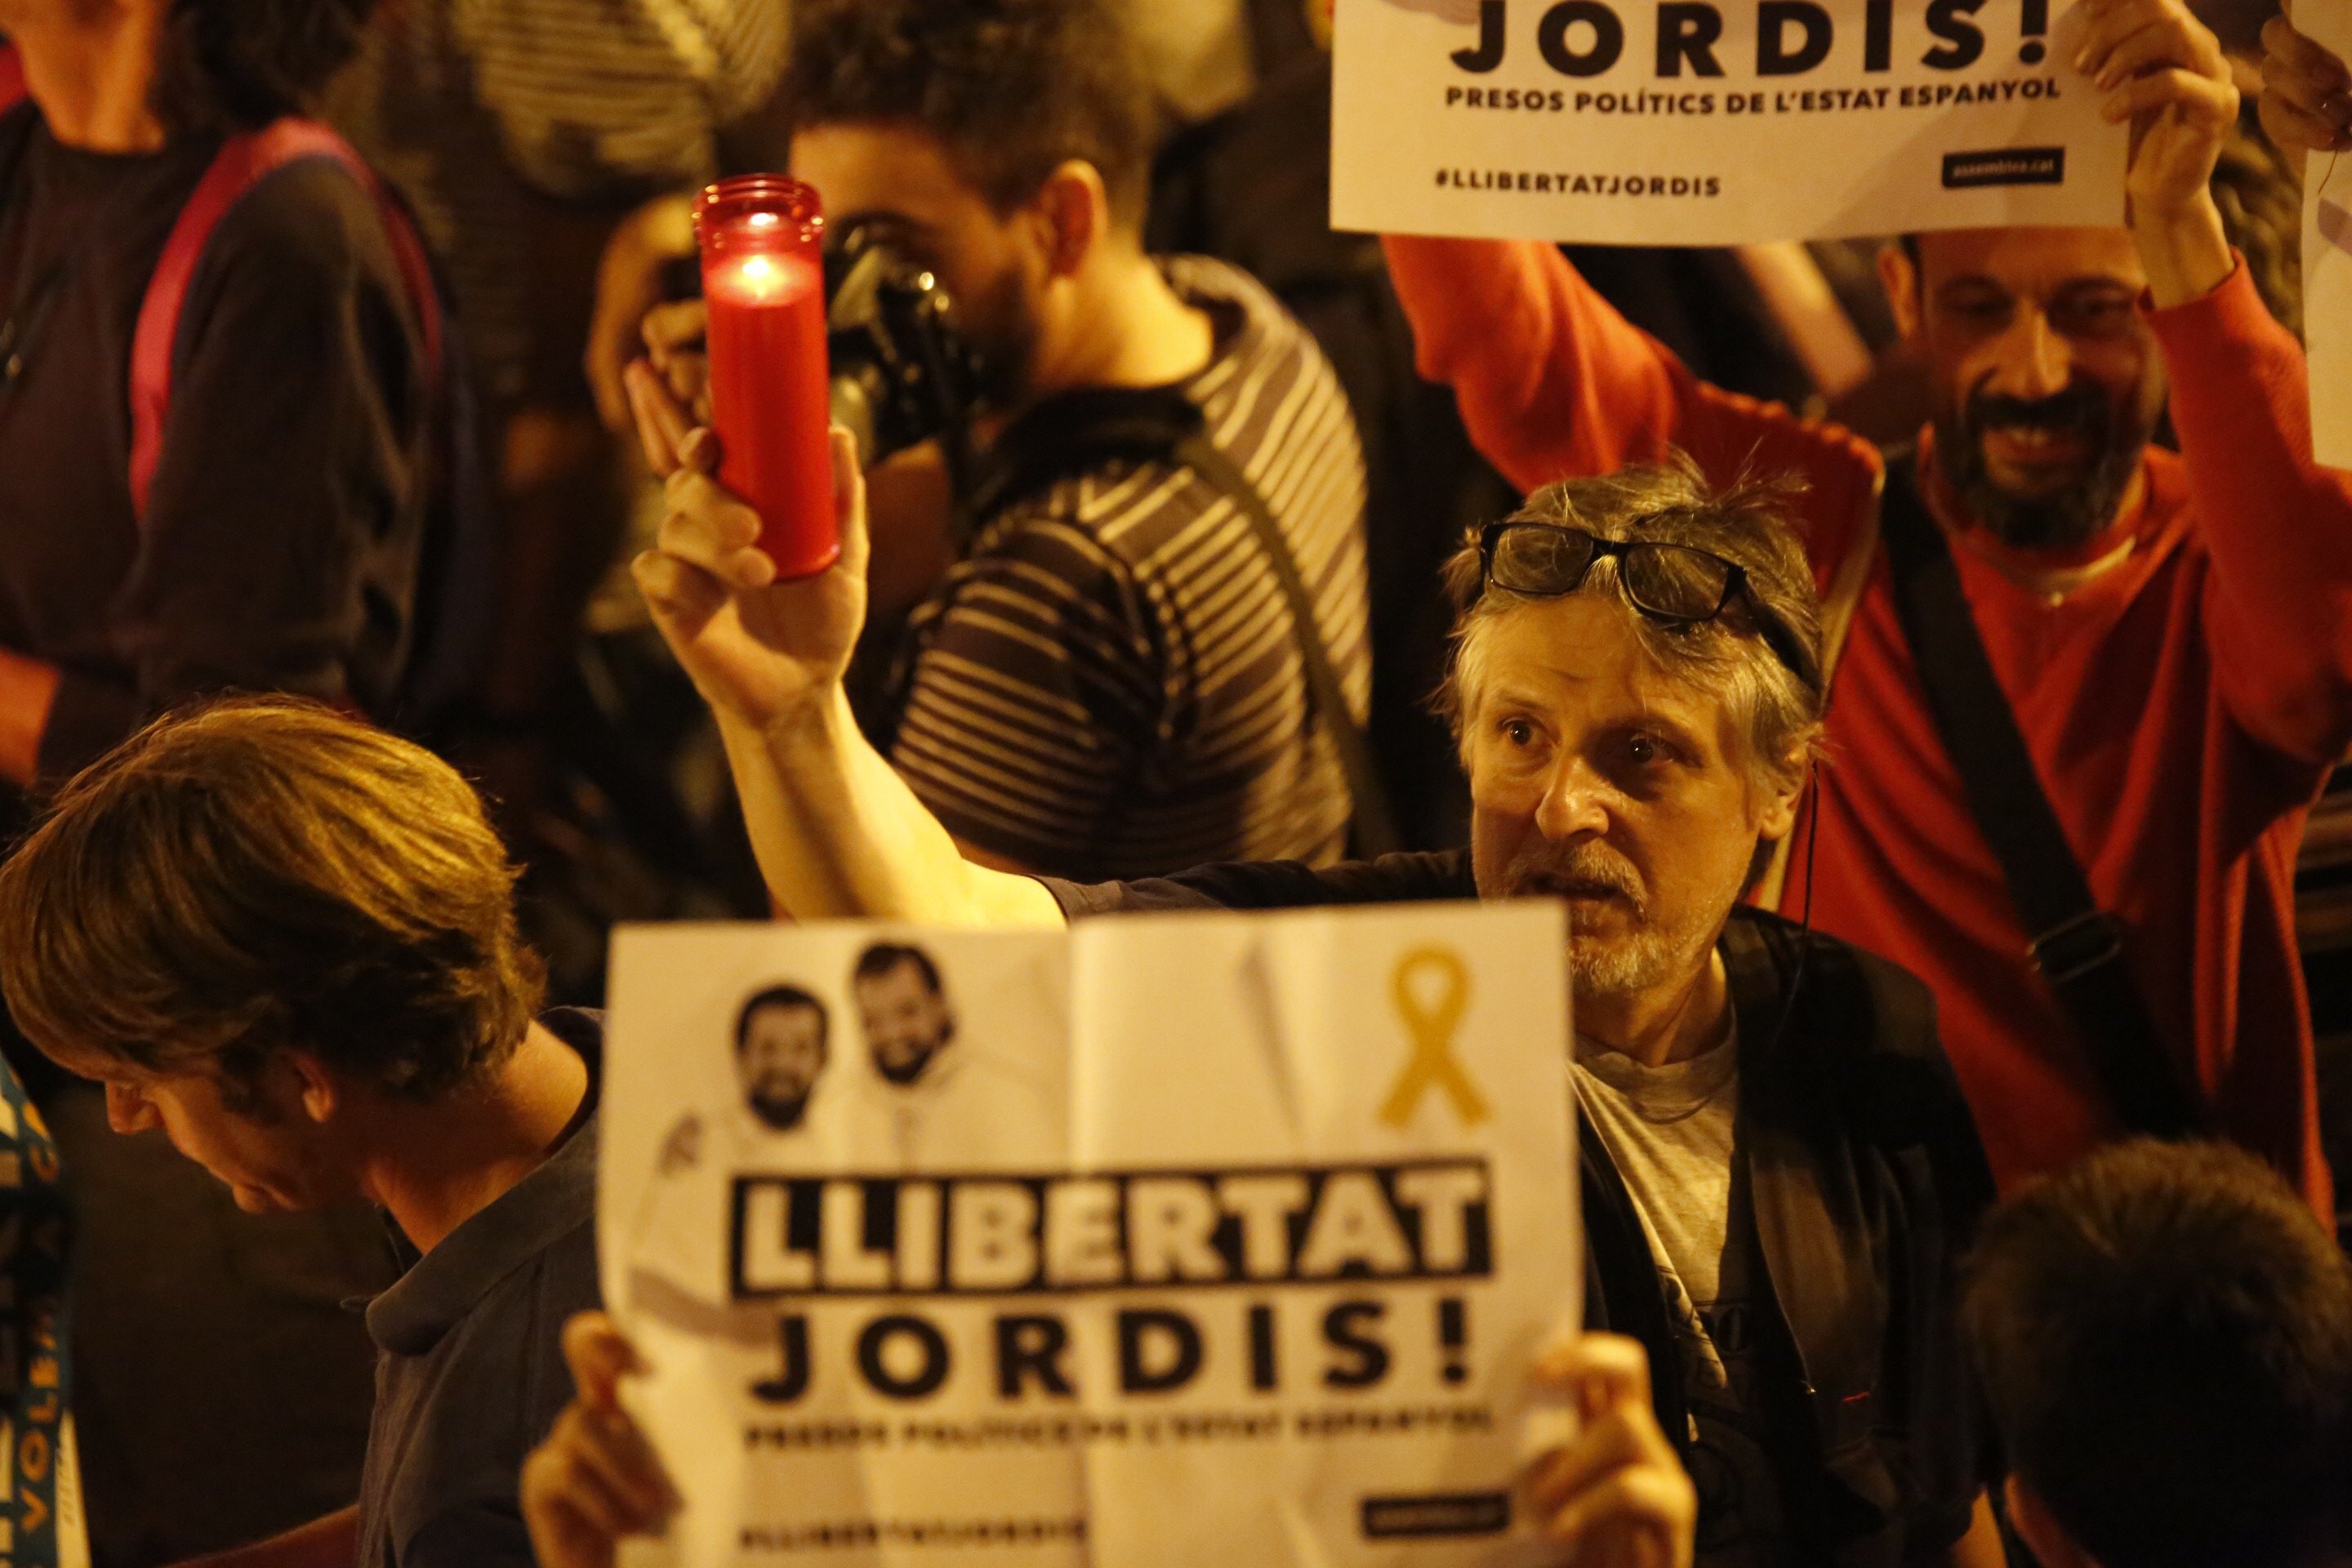 El manifiesto por la libertad de Jordi Sànchez y Jordi Cuixart